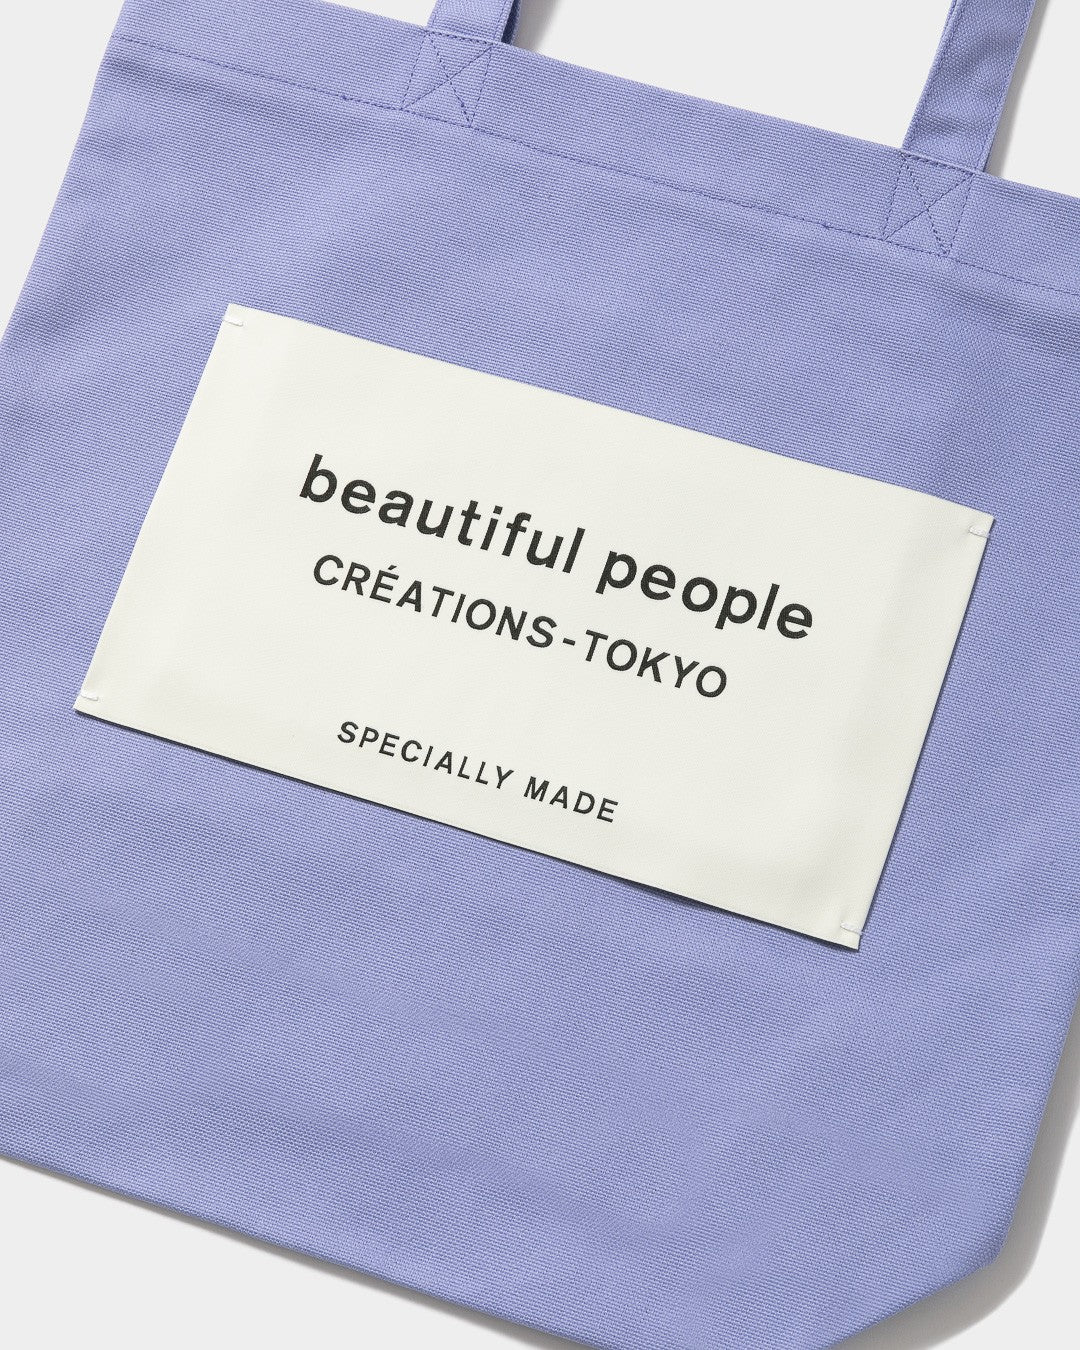 beautiful people （ビューティフルピープル）/ SDGs name tag tote bag (ネーム トートバッグ) / パープル